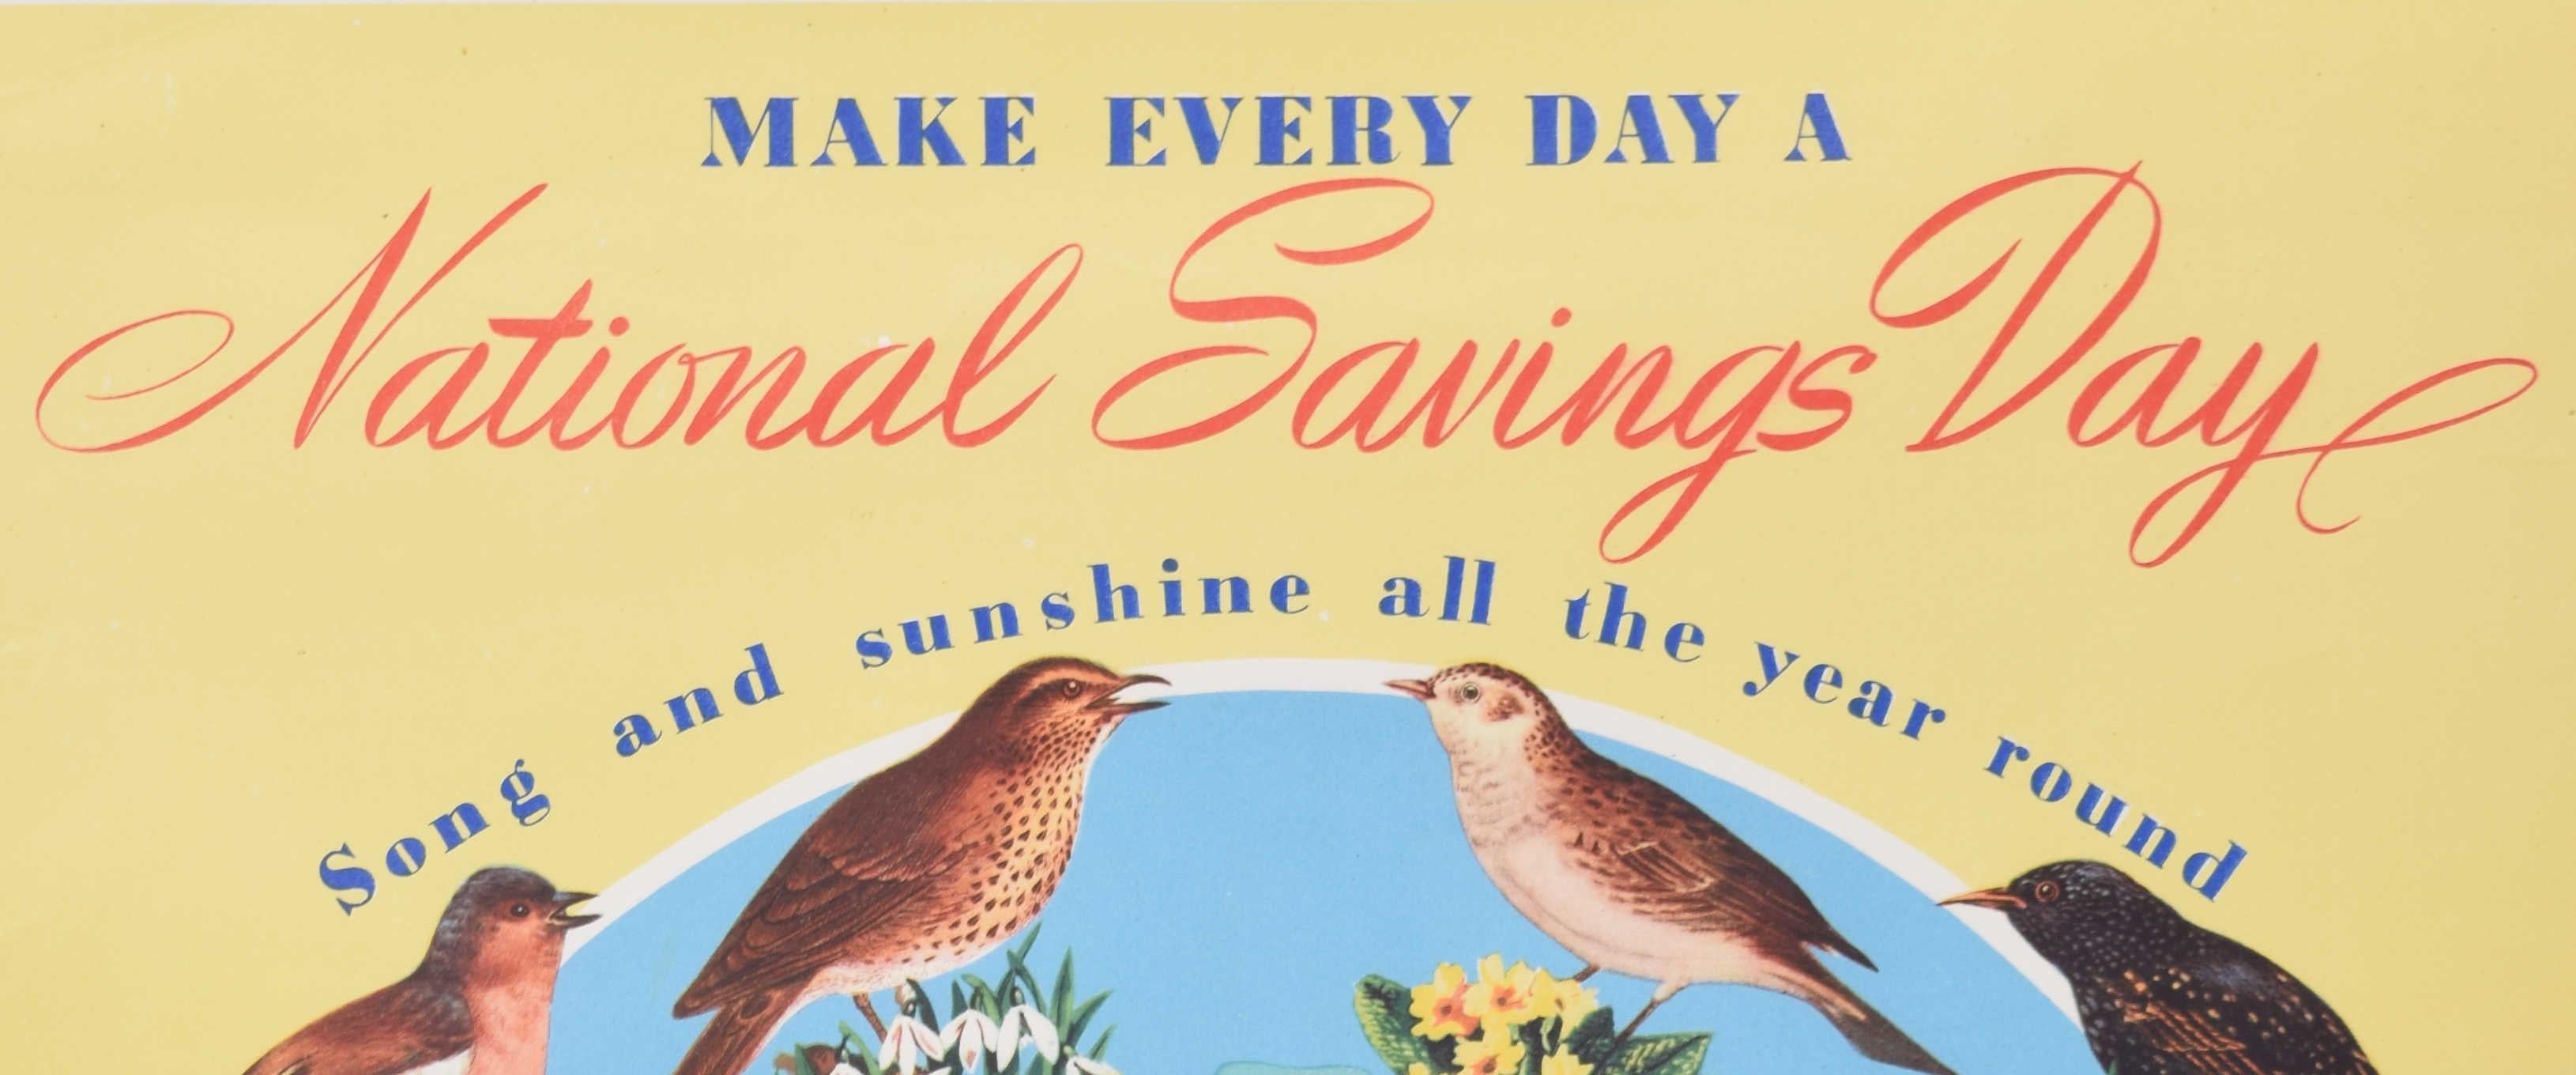 National Savings 1947 original vintage calendar poster  - Print by Unknown